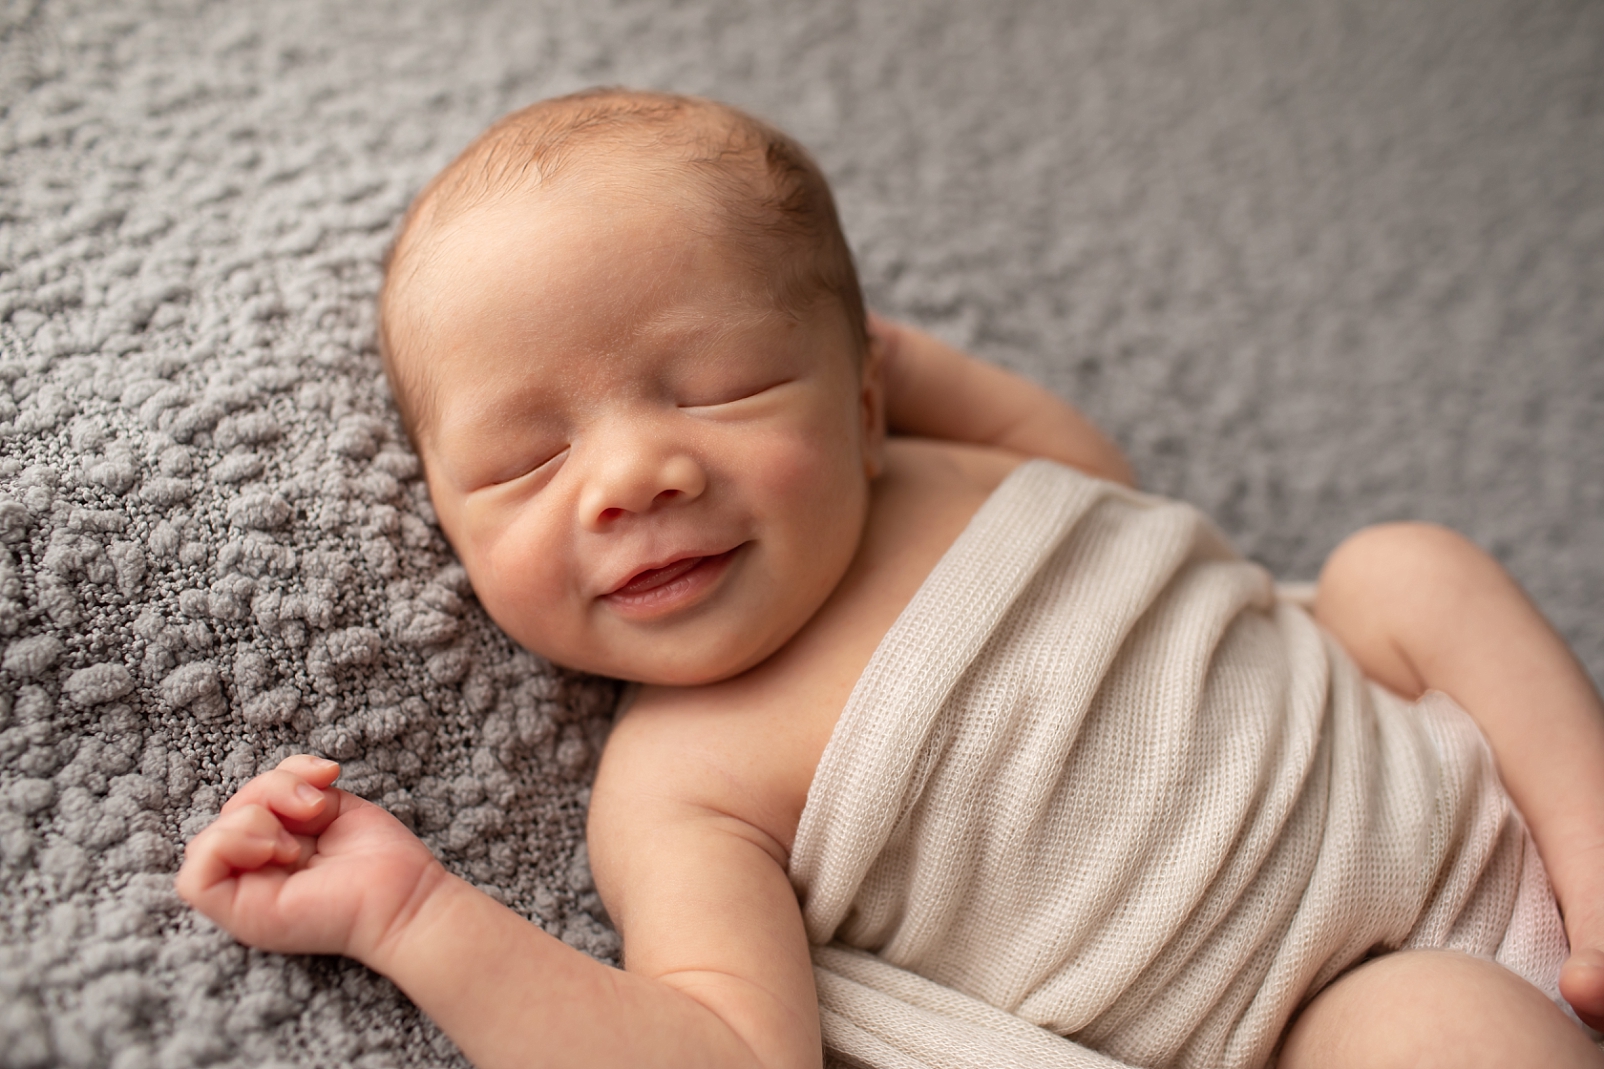 newborn boy on gray fabric smiling
